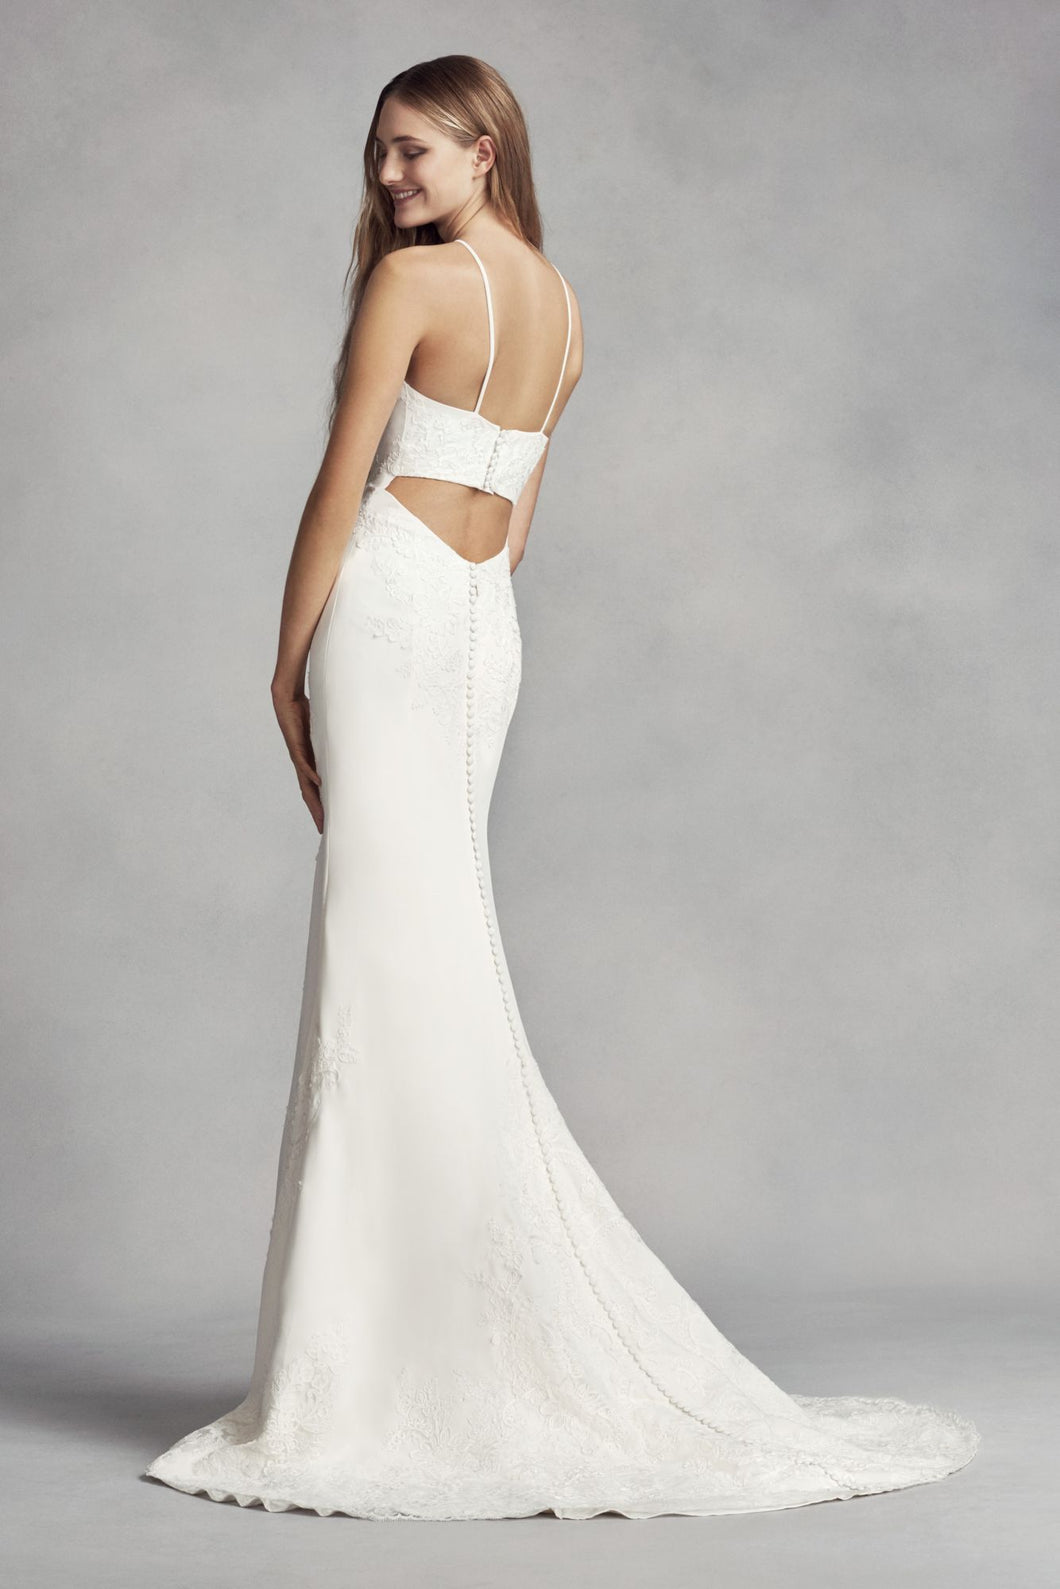 Vera Wang White '351346' size 8 used wedding dress back view on model